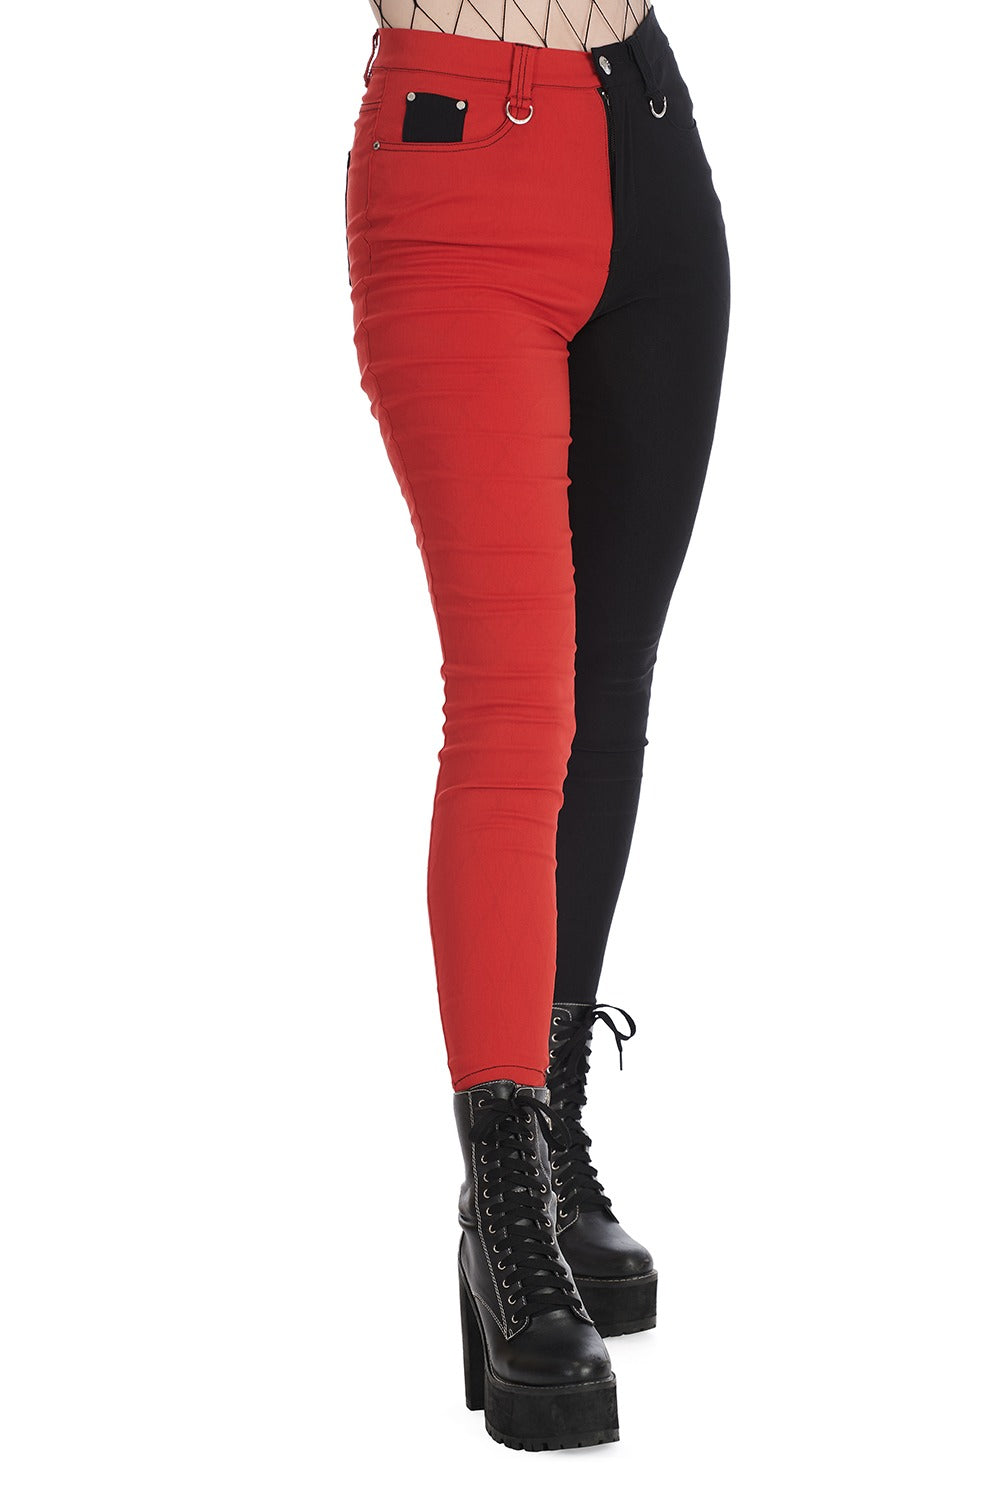 Mismatched Split Leg Pants [RED/BLACK]